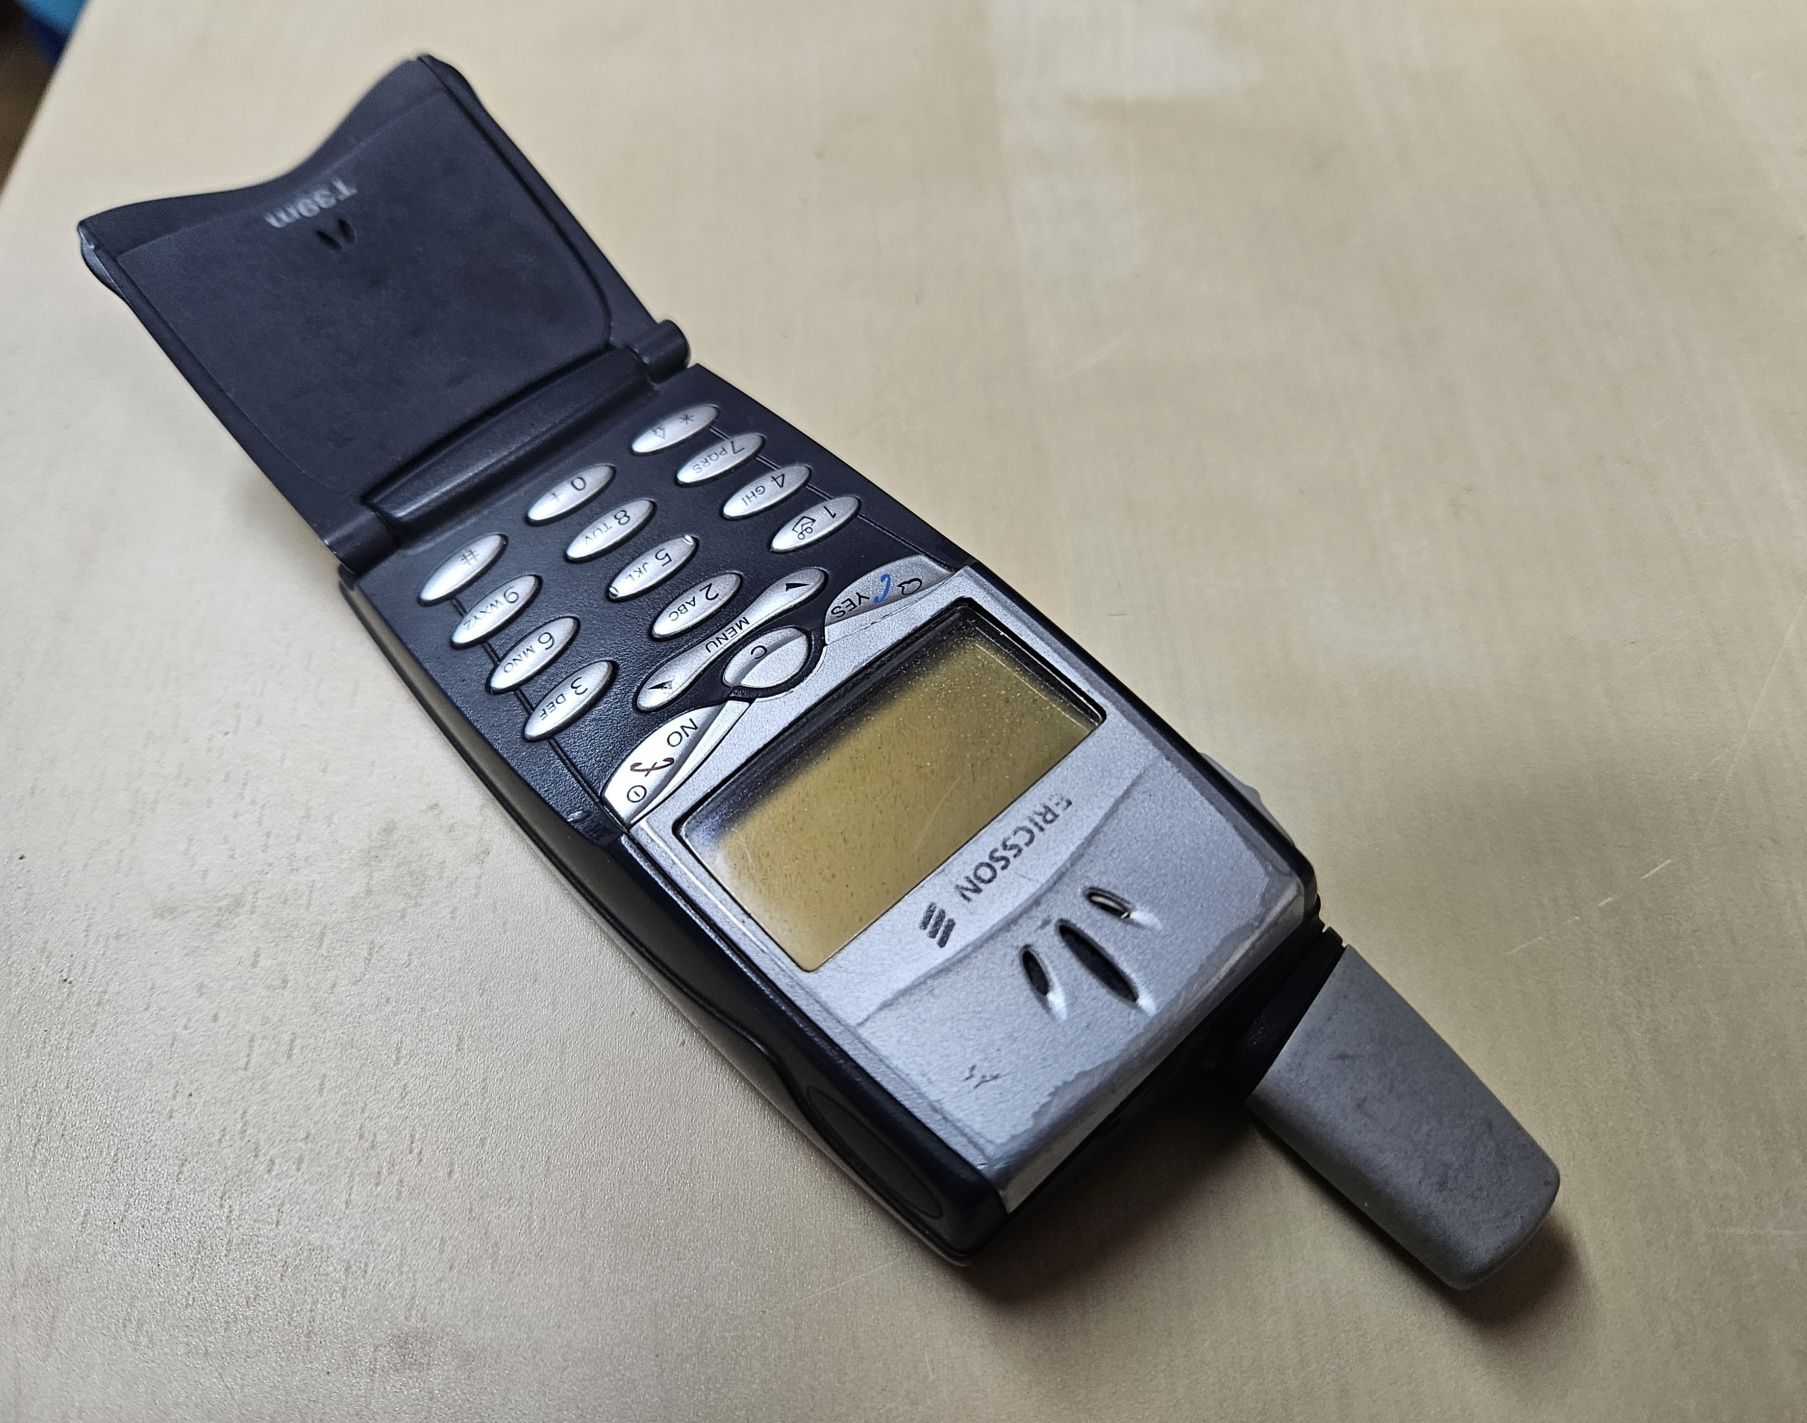 Ericsson T39m stary telefon jak T28s